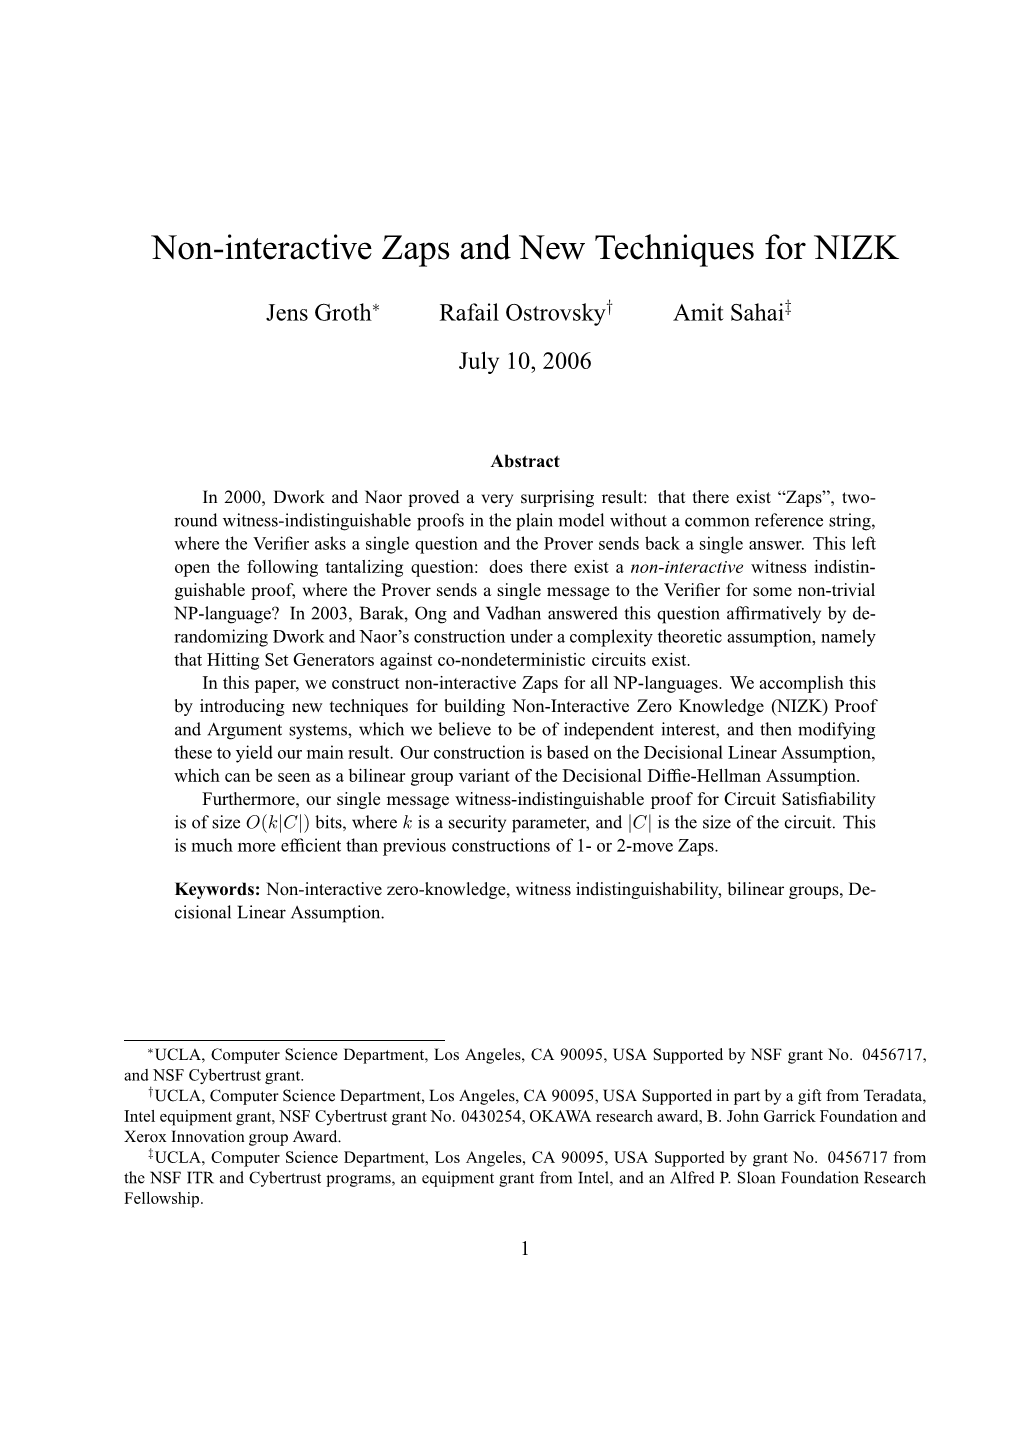 Non-Interactive Zaps and New Techniques for NIZK